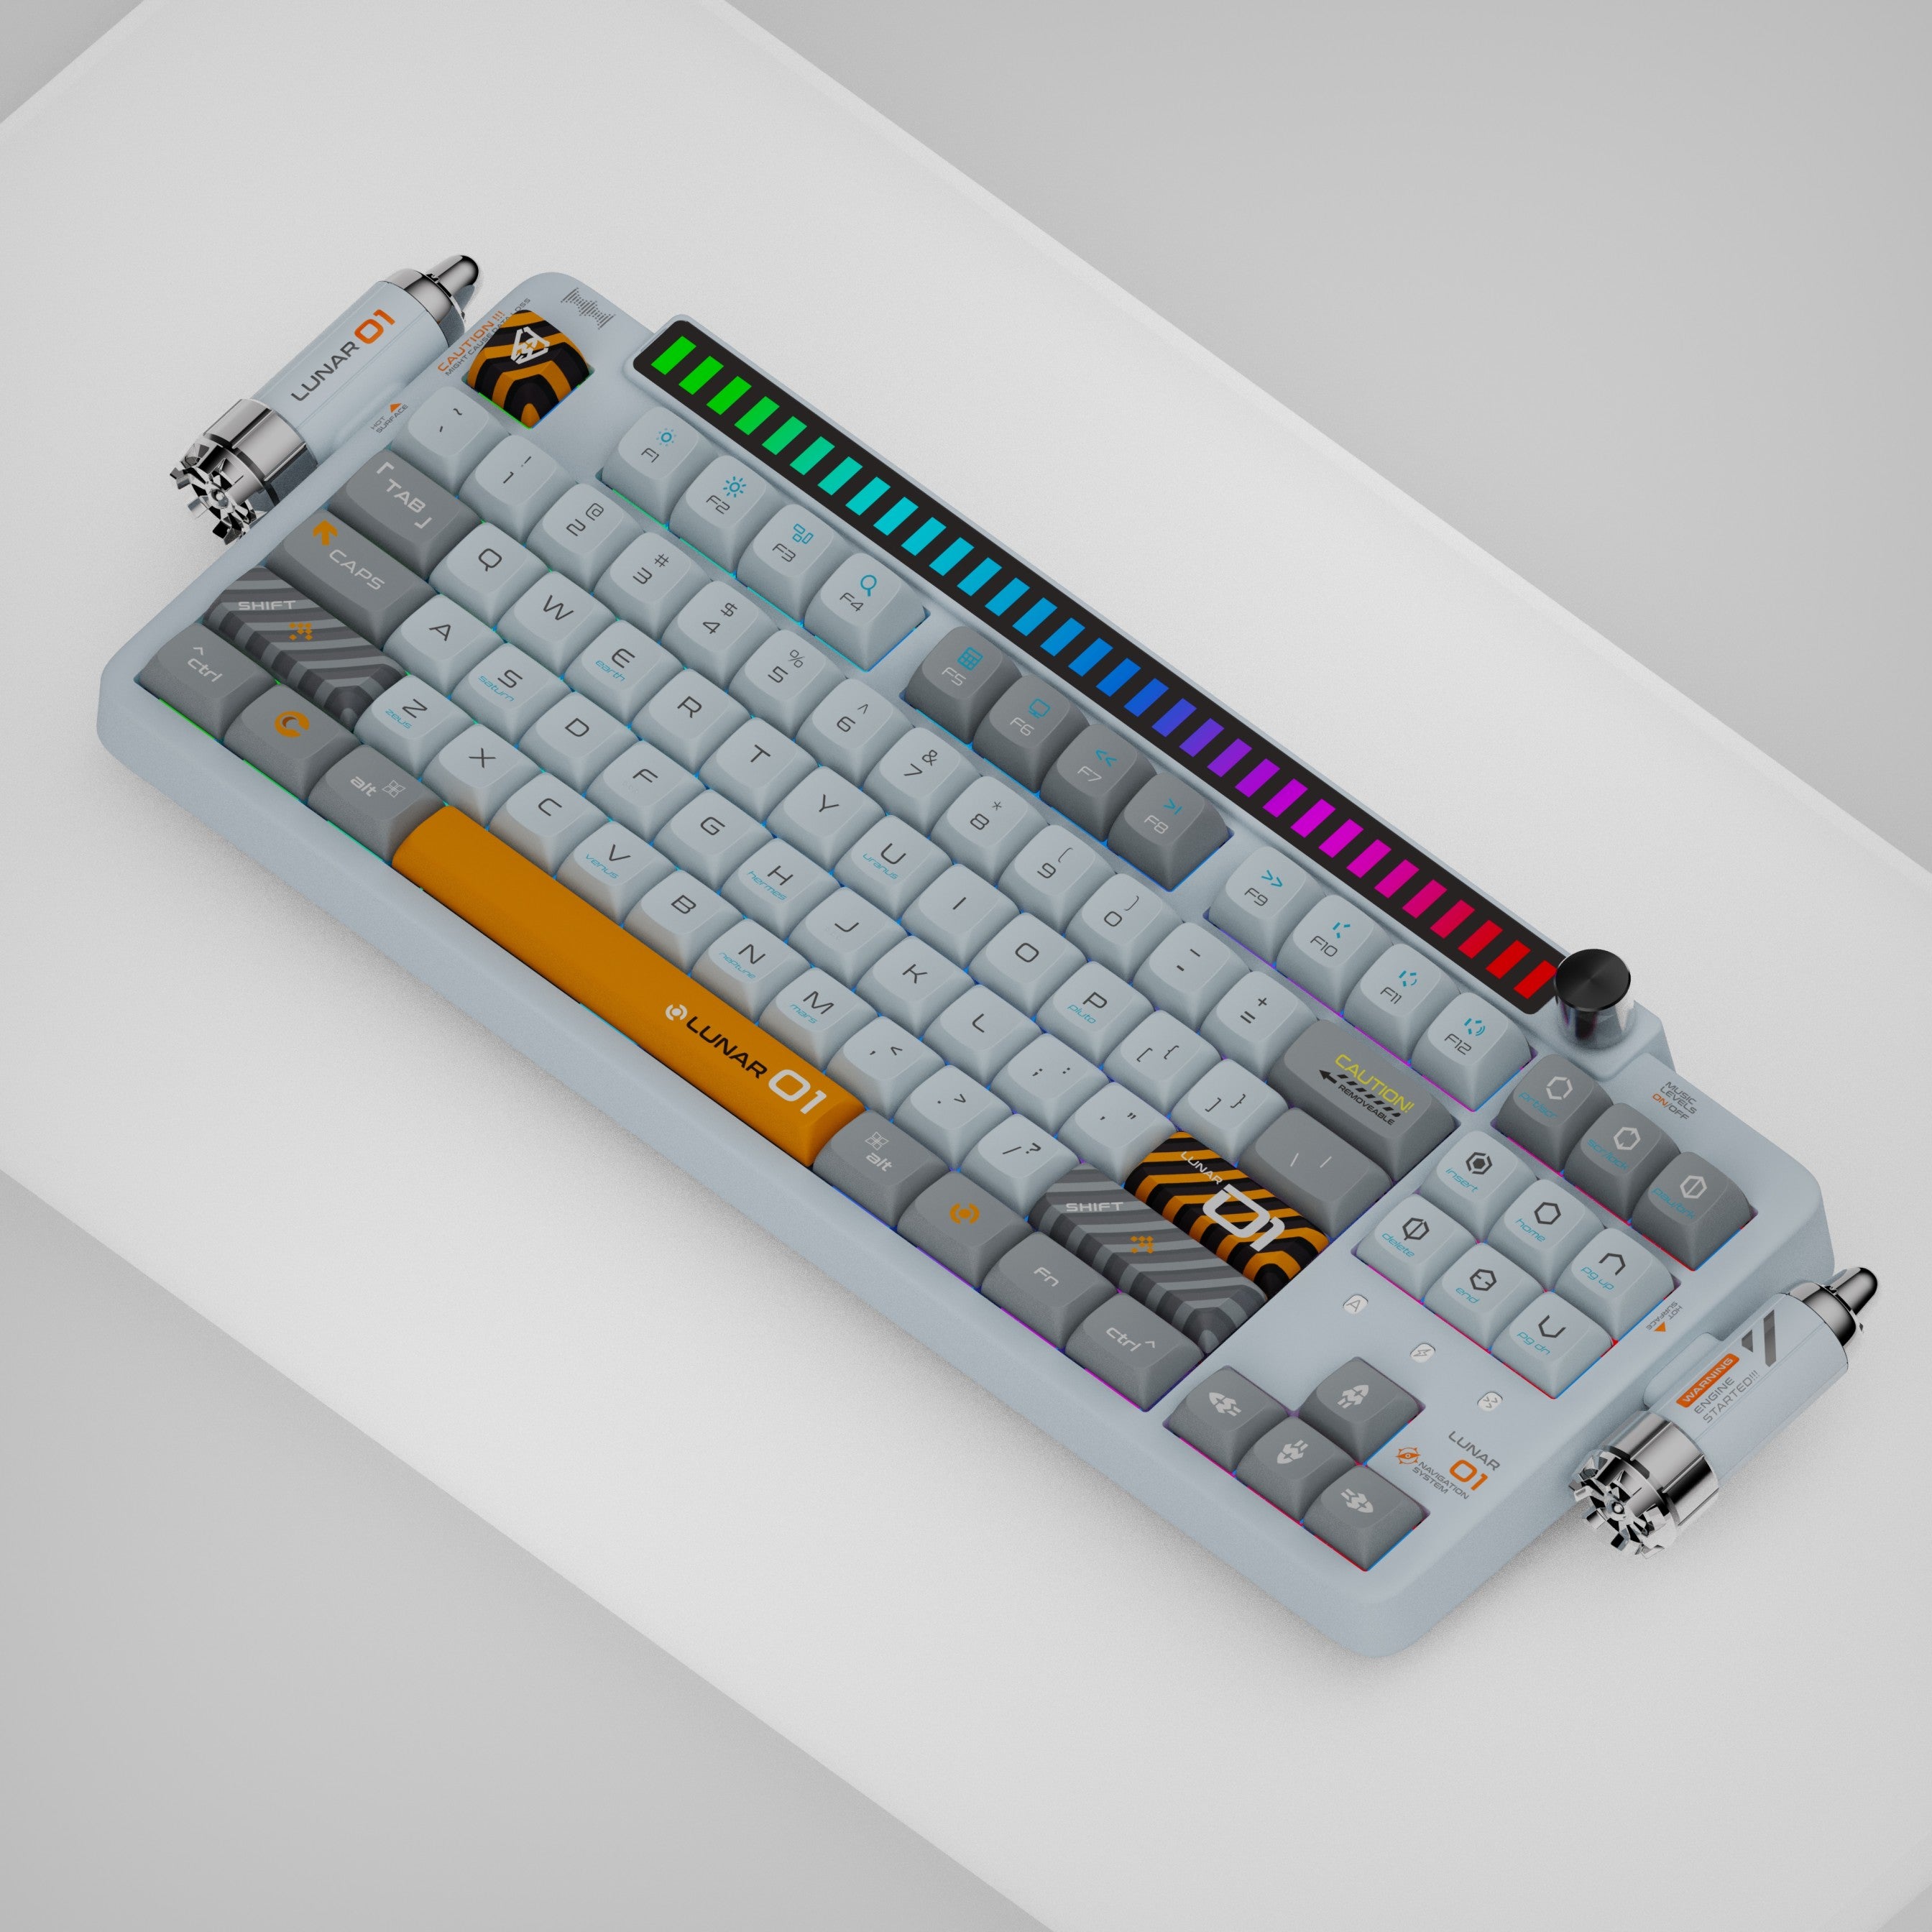 keysme lunar 01 spaceship wireless custom mechanical keyboard Gateron switches hot swappable lunar white